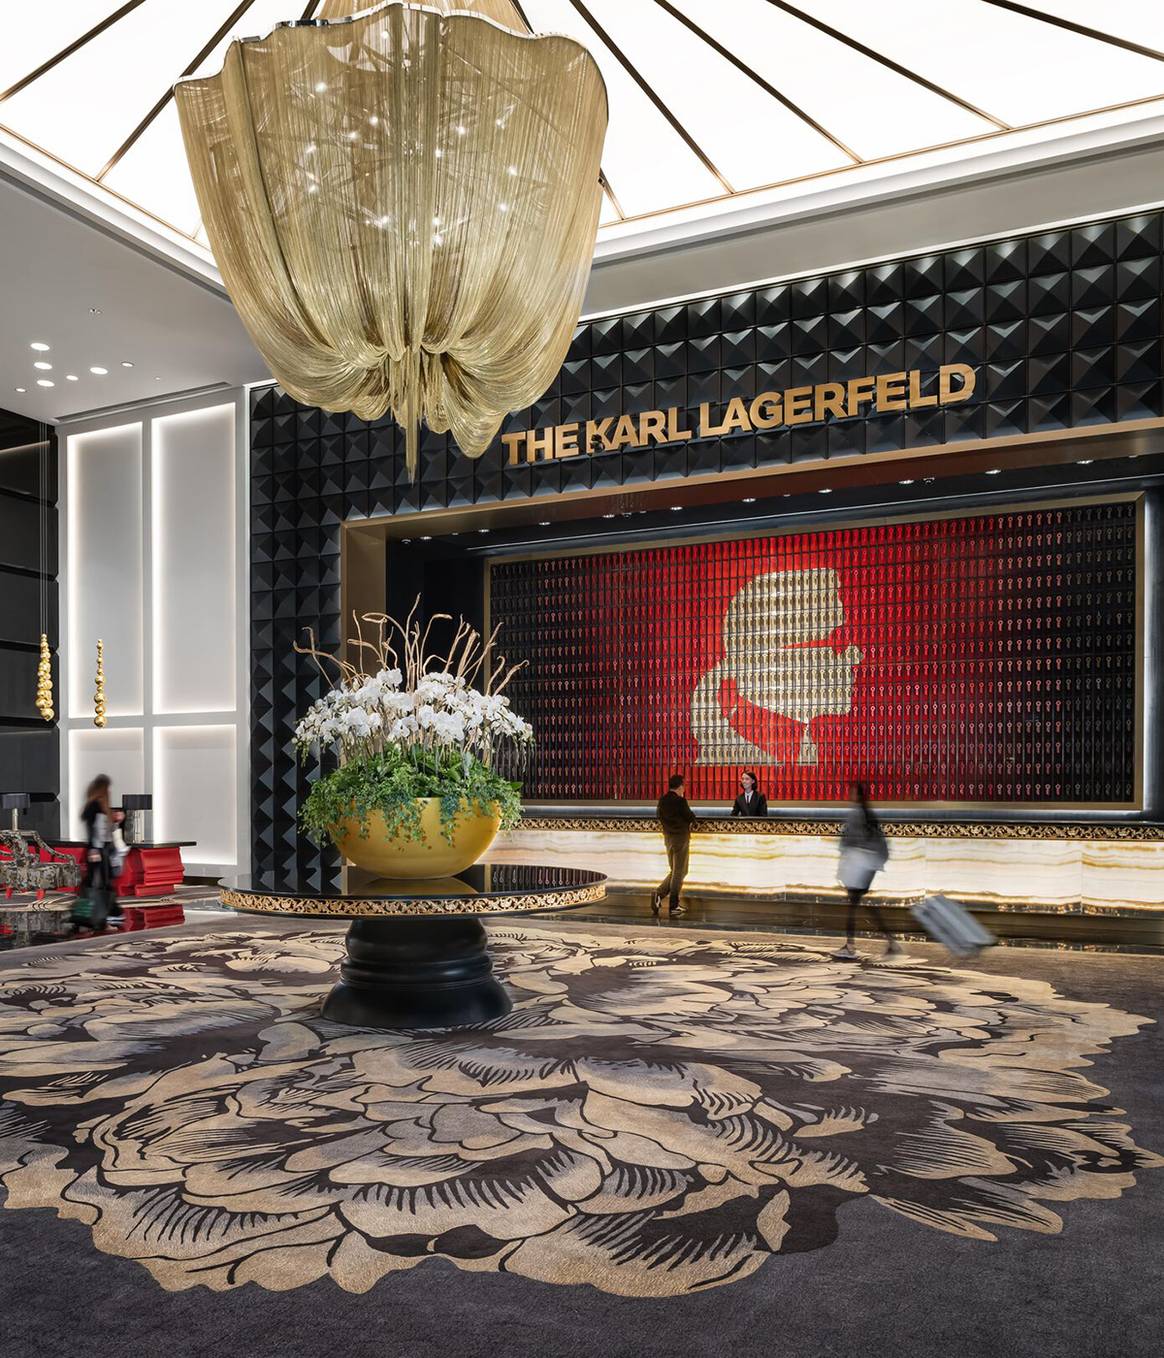 Vista interior del hotel The Karl Lagerfeld de Macao.